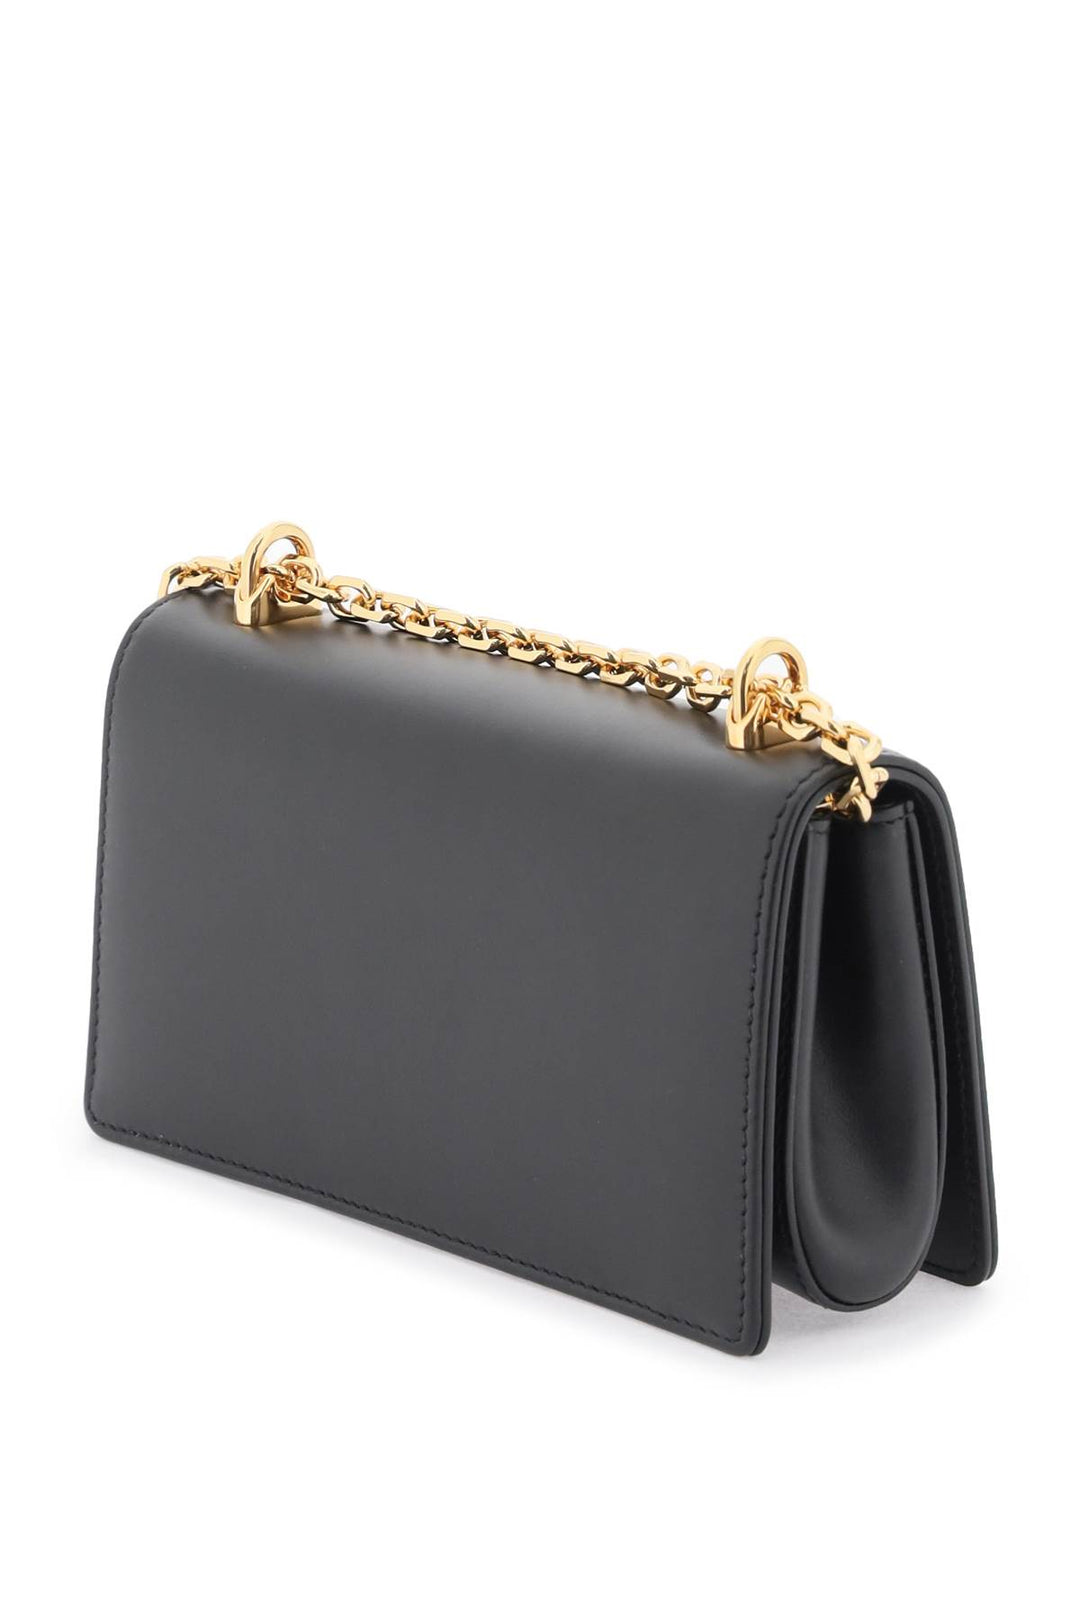 Dolce & Gabbana Dg Girls Mini Bag   Black